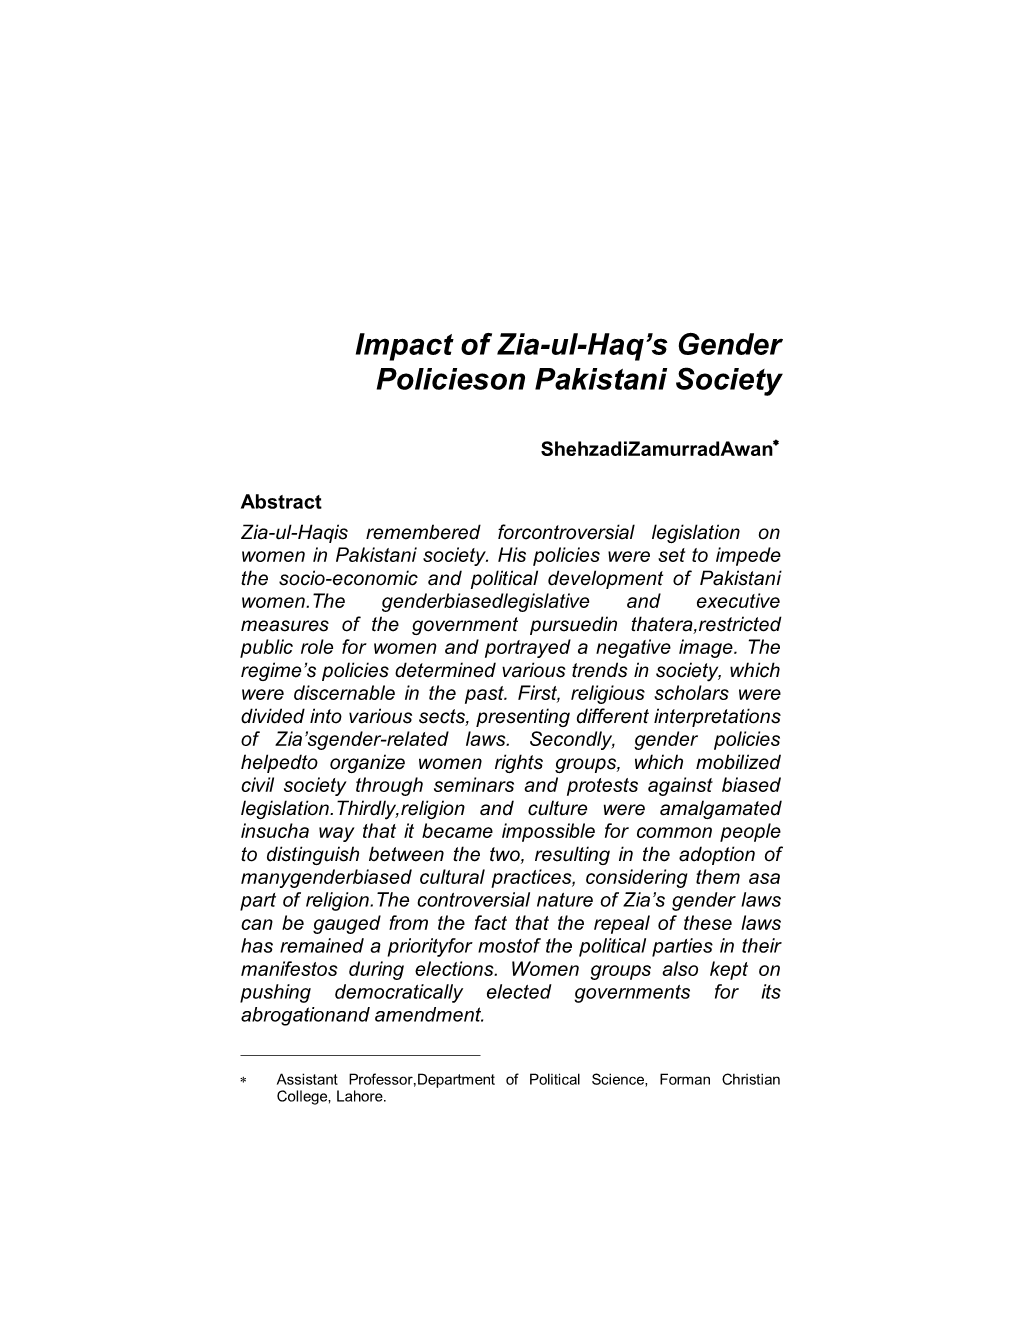 Impact of Zia-Ul-Haq's Gender Policieson Pakistani Society